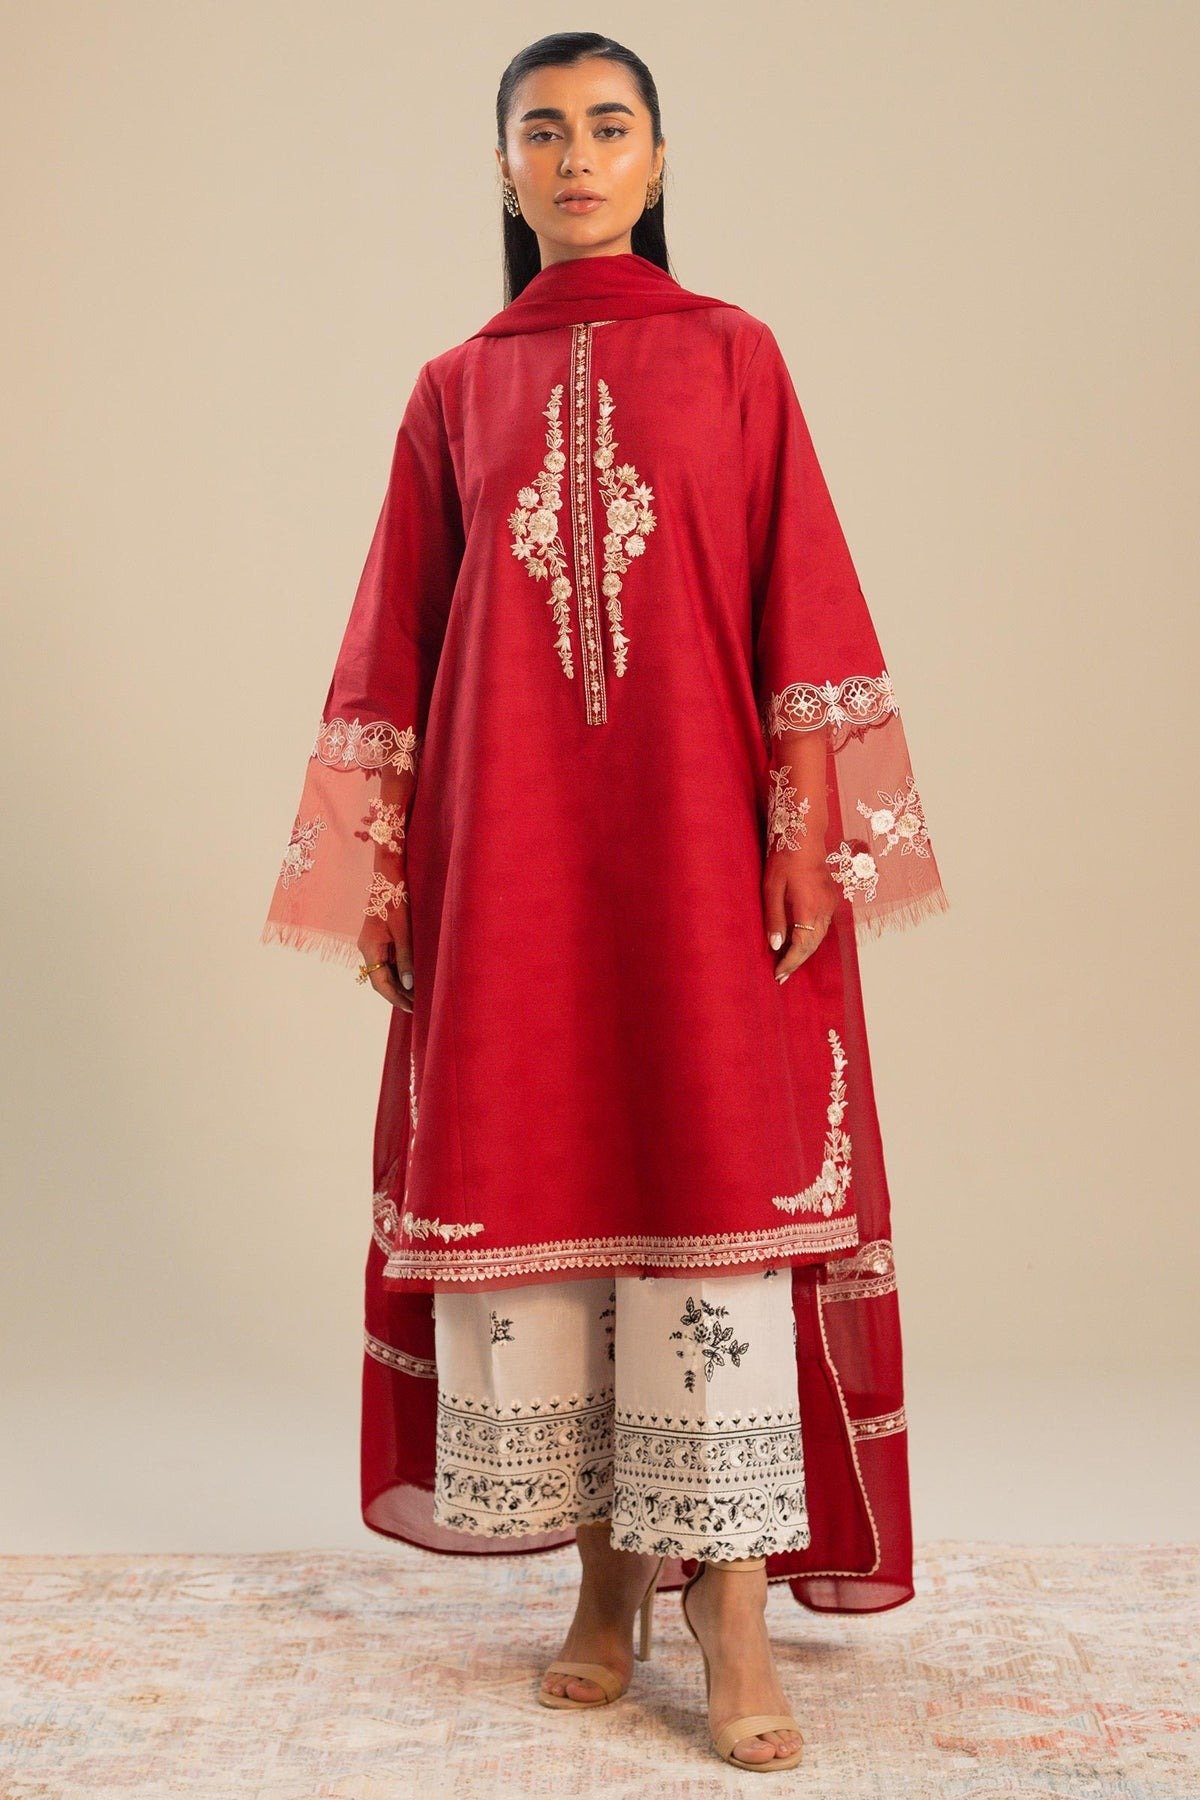 Zara shah empires collection women new dress design unstitched luxury lawn eid suit pakistan fashion